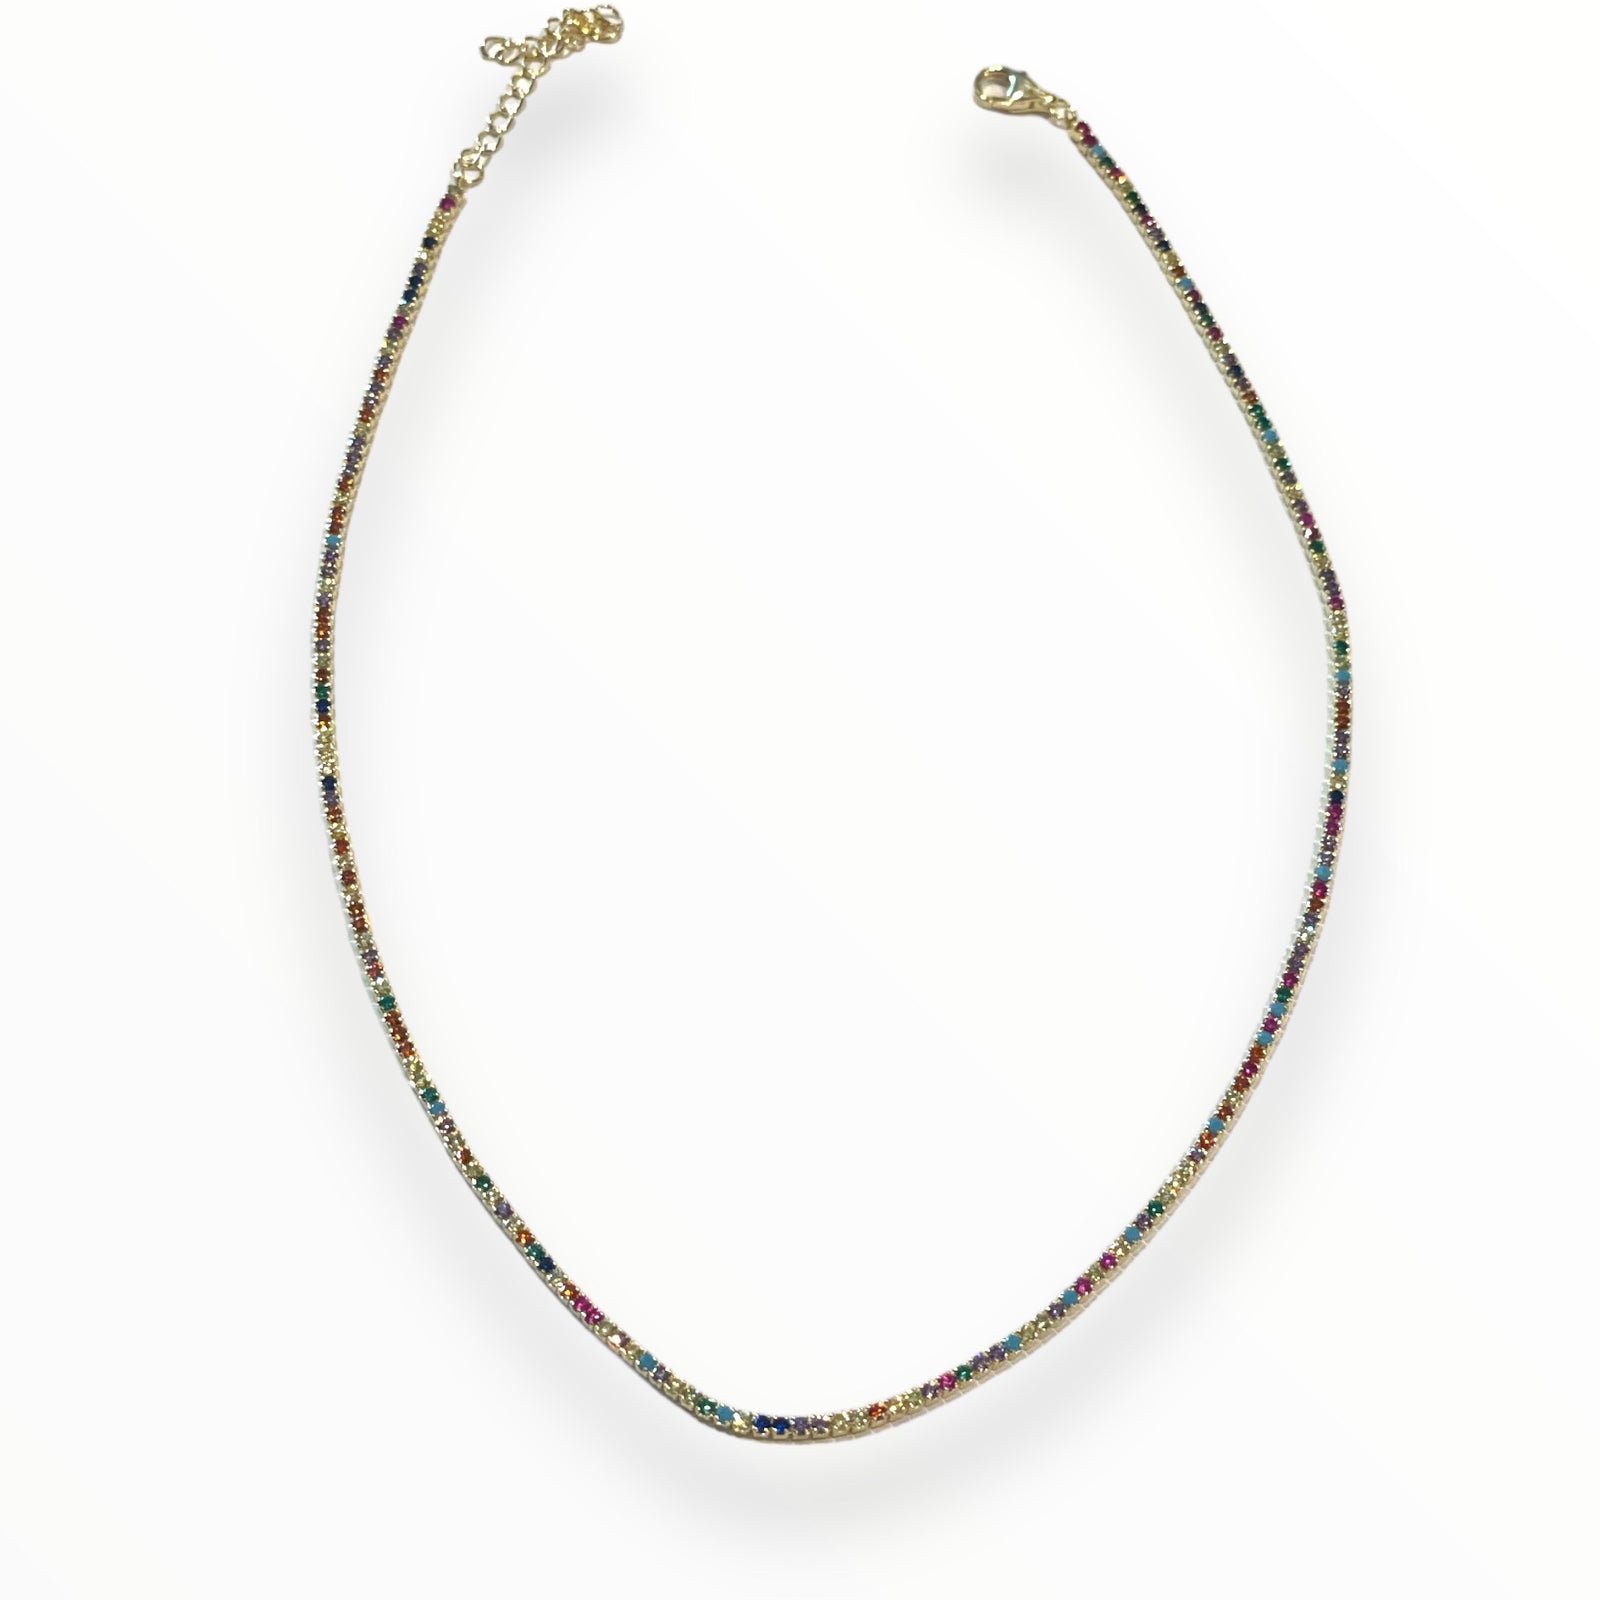 Thin rainbow tennis necklace